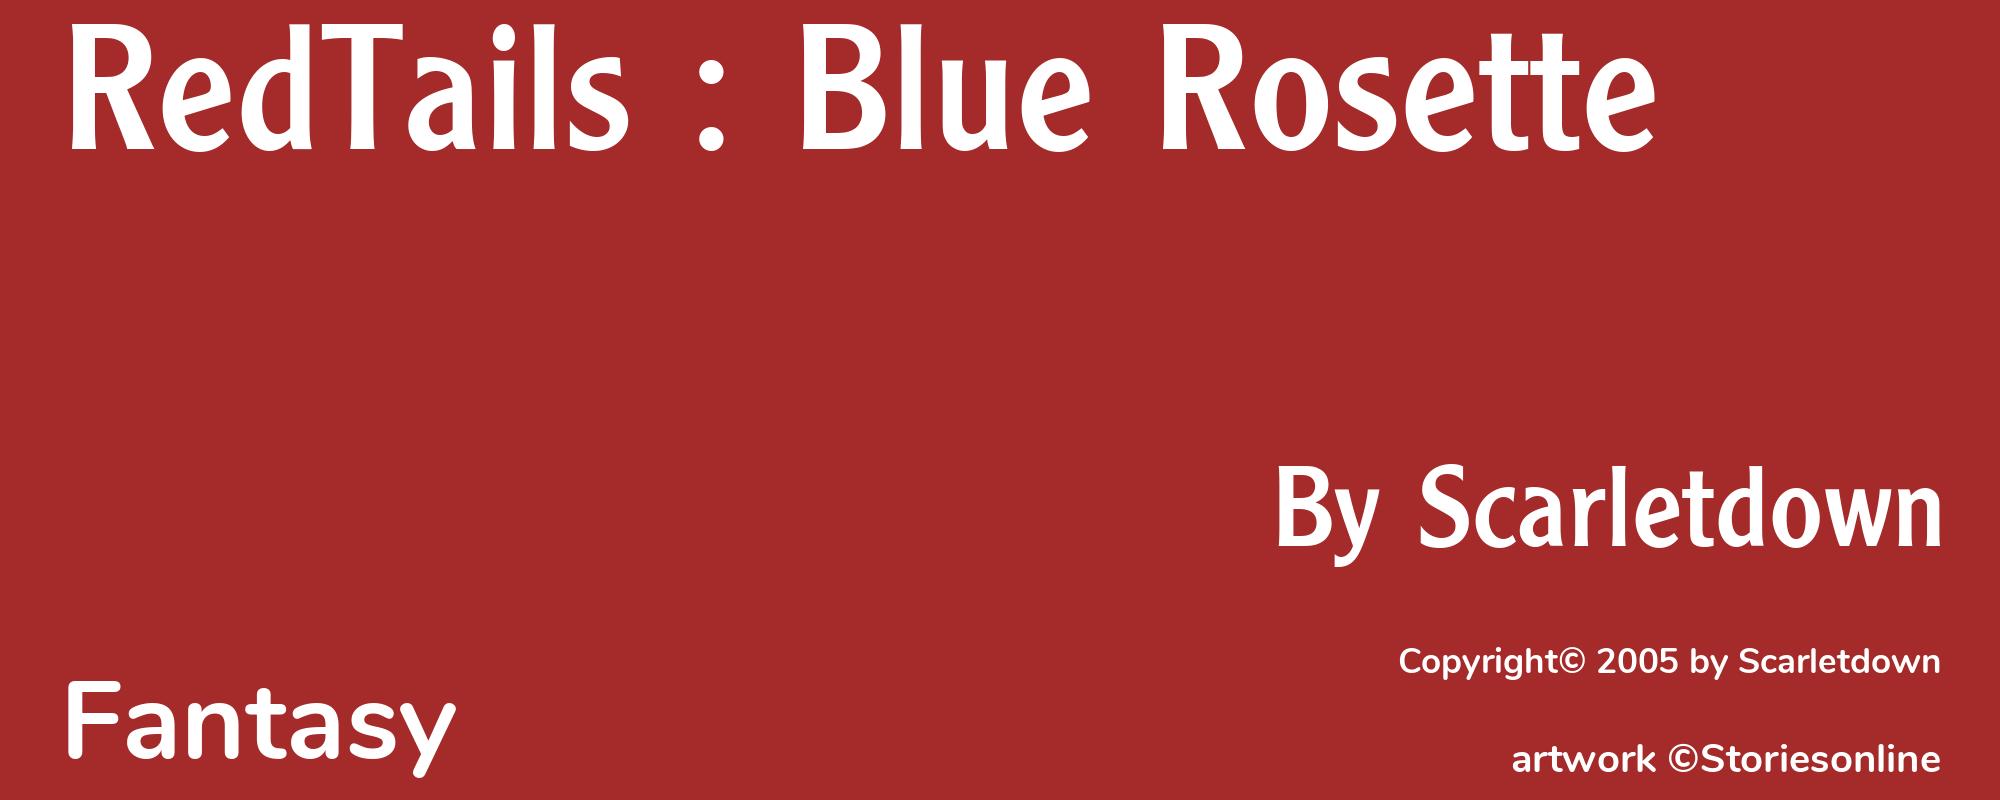 RedTails : Blue Rosette - Cover